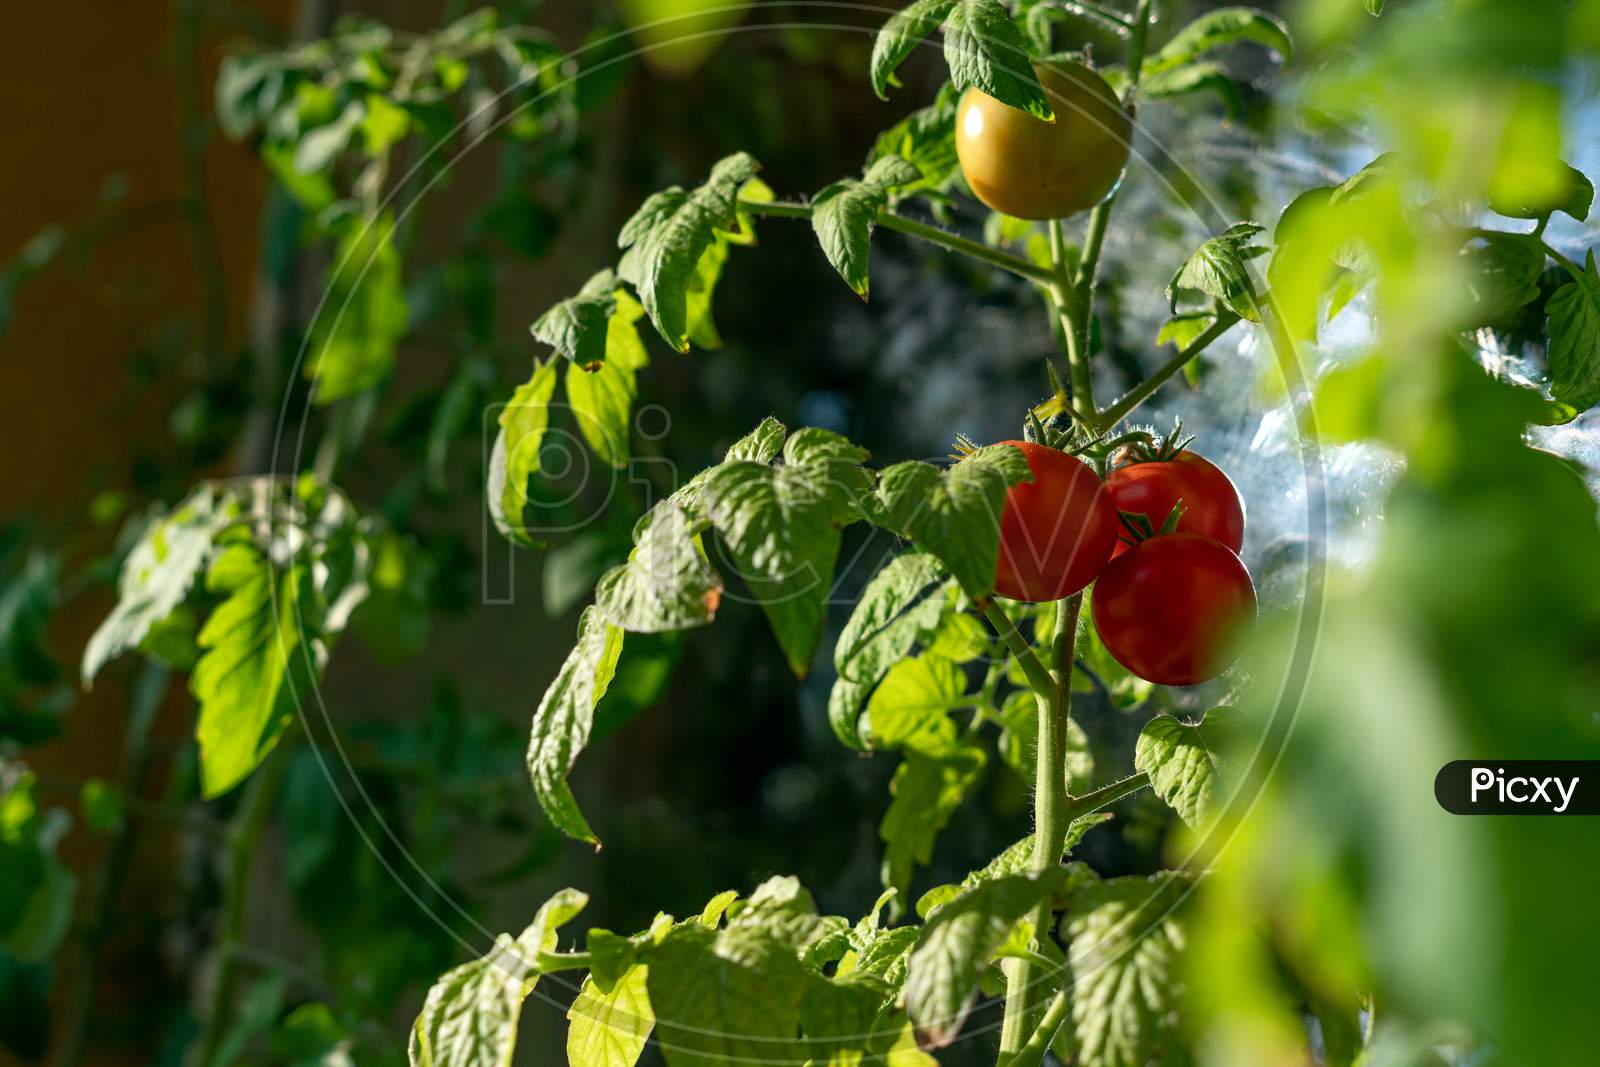 Ecological and natural ripe Uhlan tomato